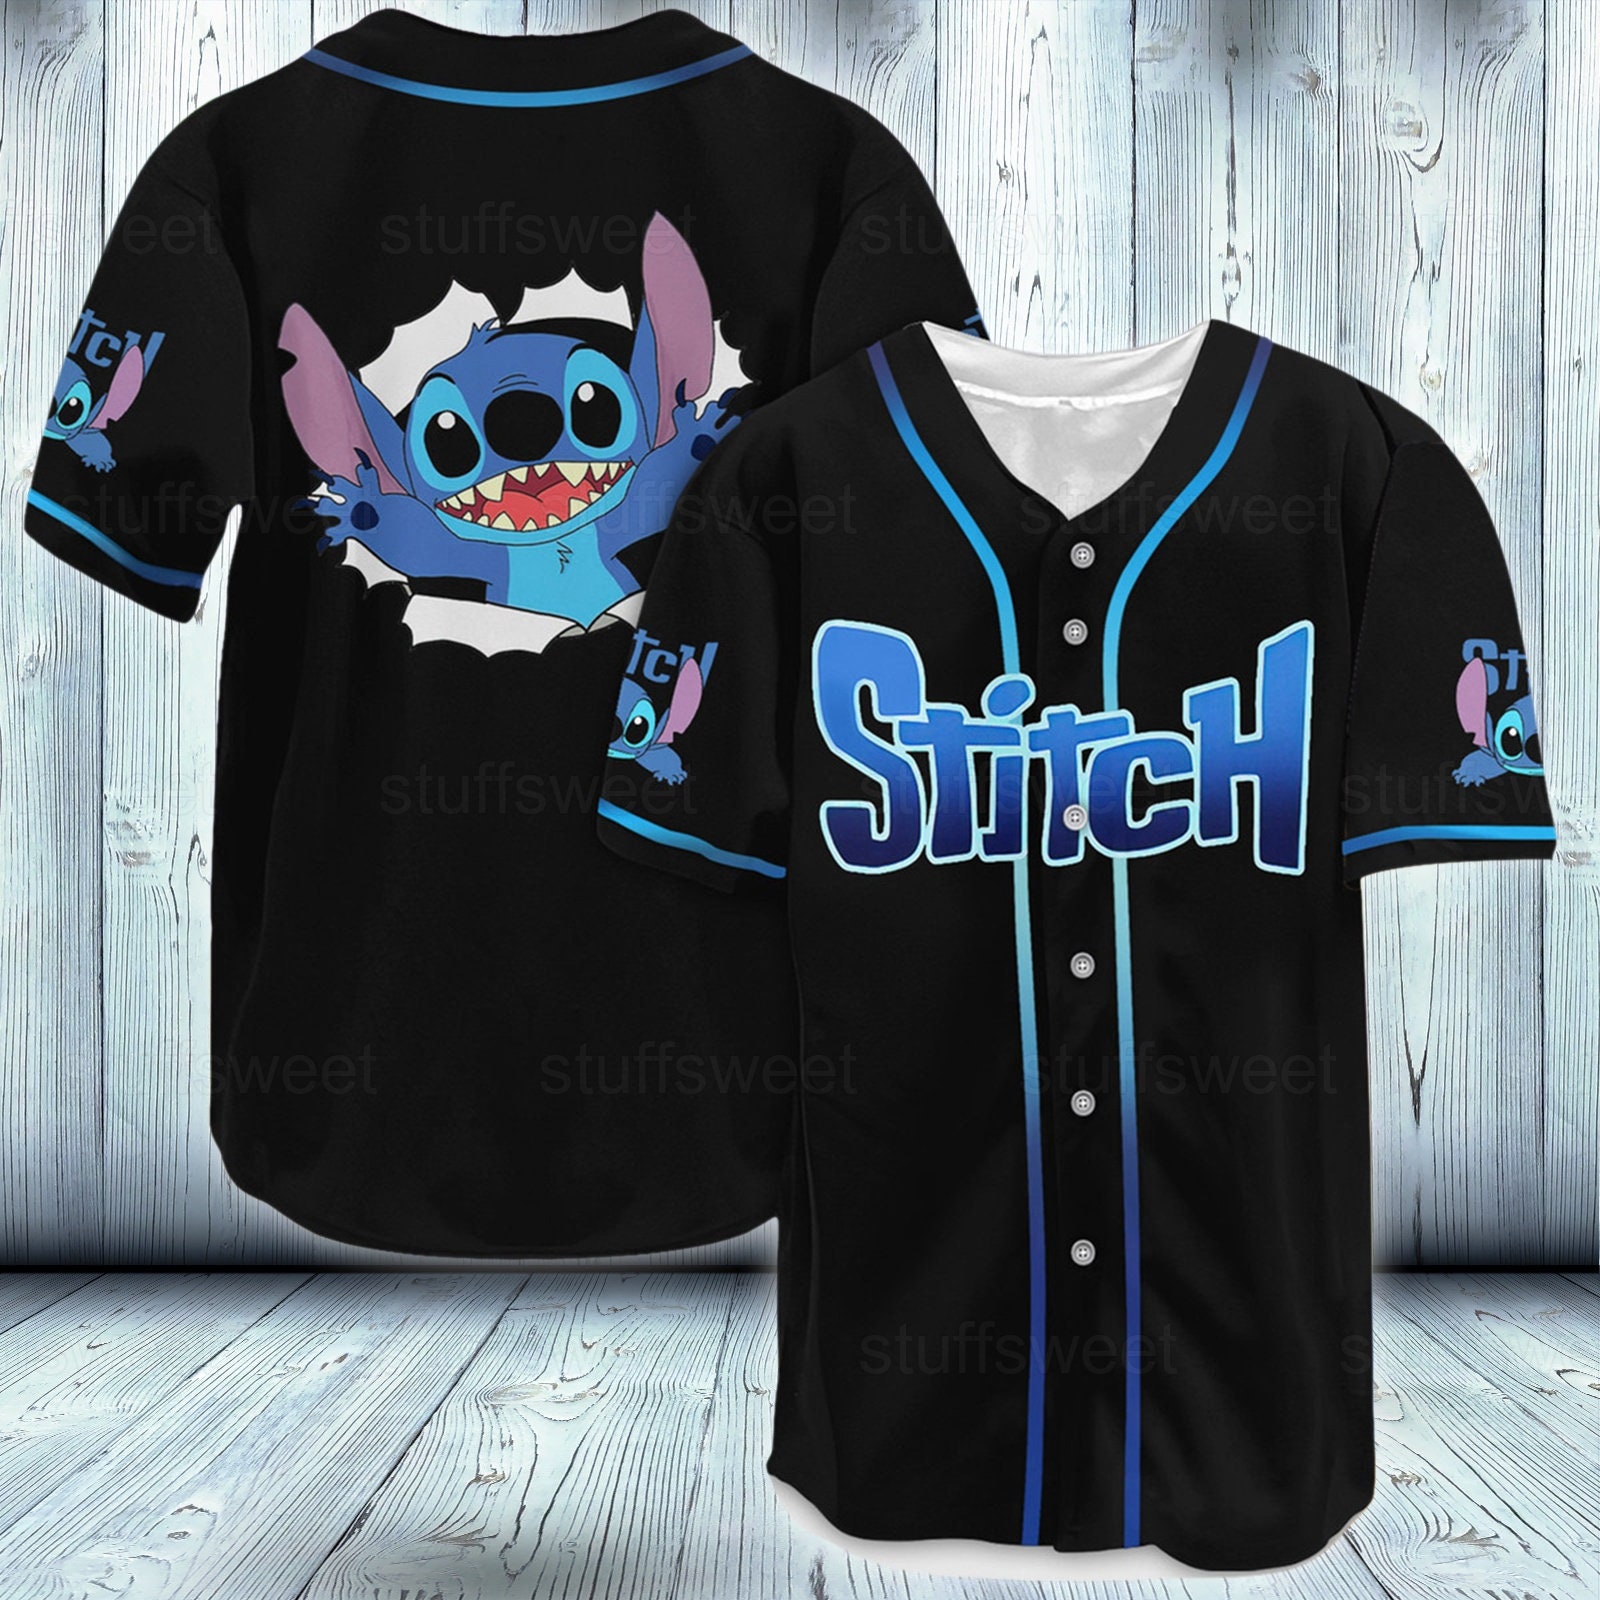 Disney Girls Lilo & Stitch and Angel Baseball Jersey-Classic Mesh Button Down Shirt